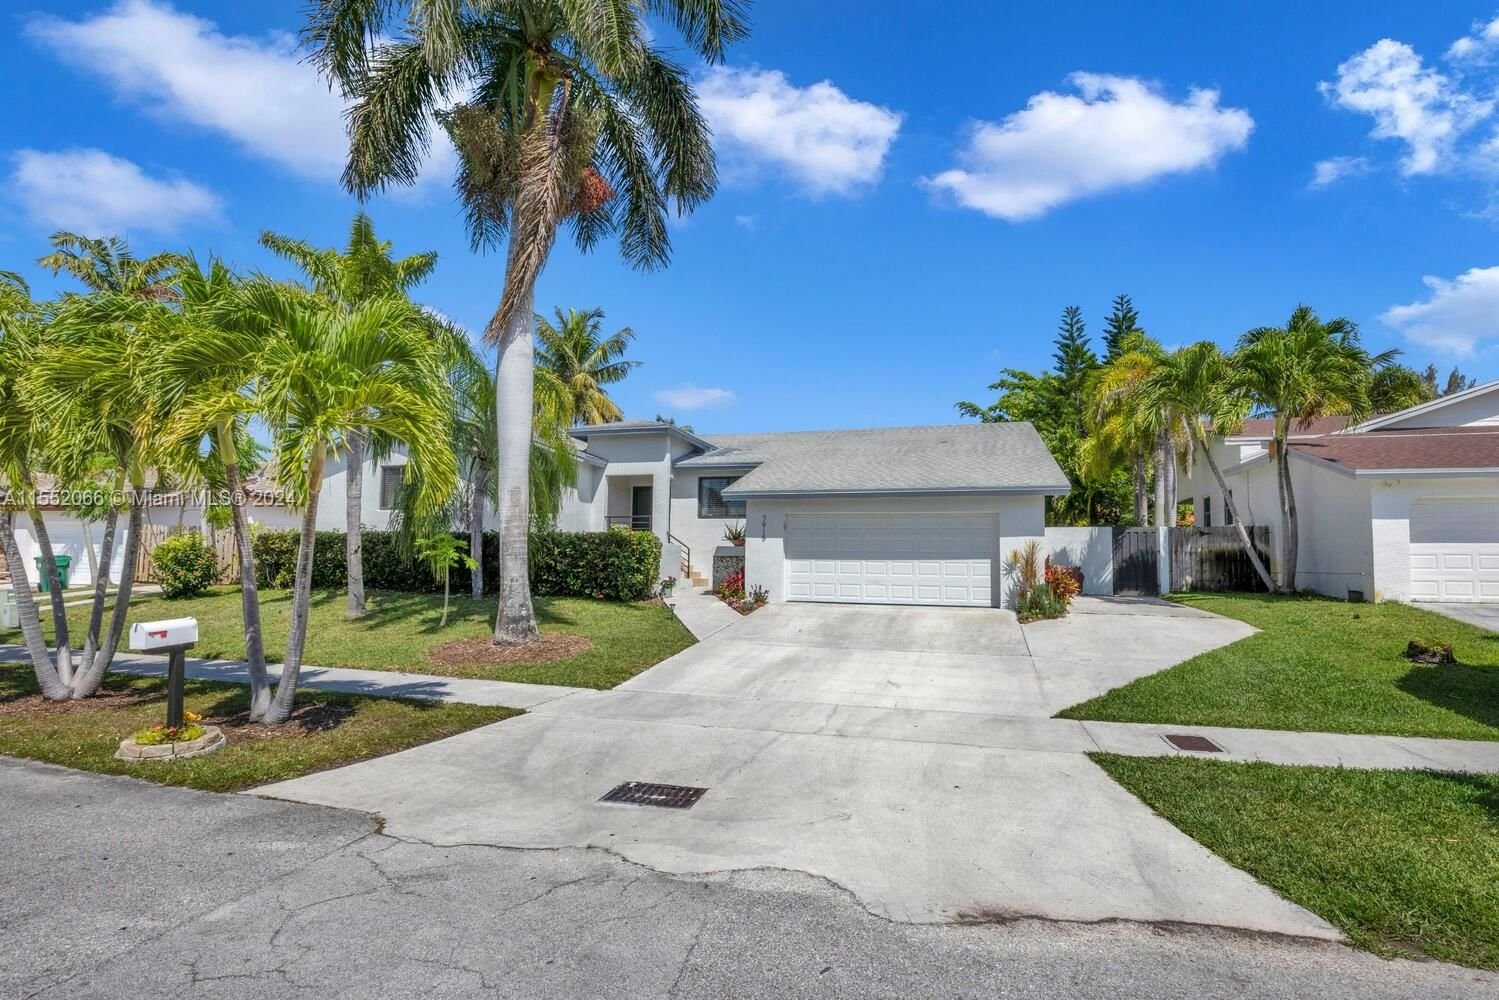 Real estate property located at 7915 201st Ter, Miami-Dade County, SAGA BAY SEC 1 PT 8, Cutler Bay, FL